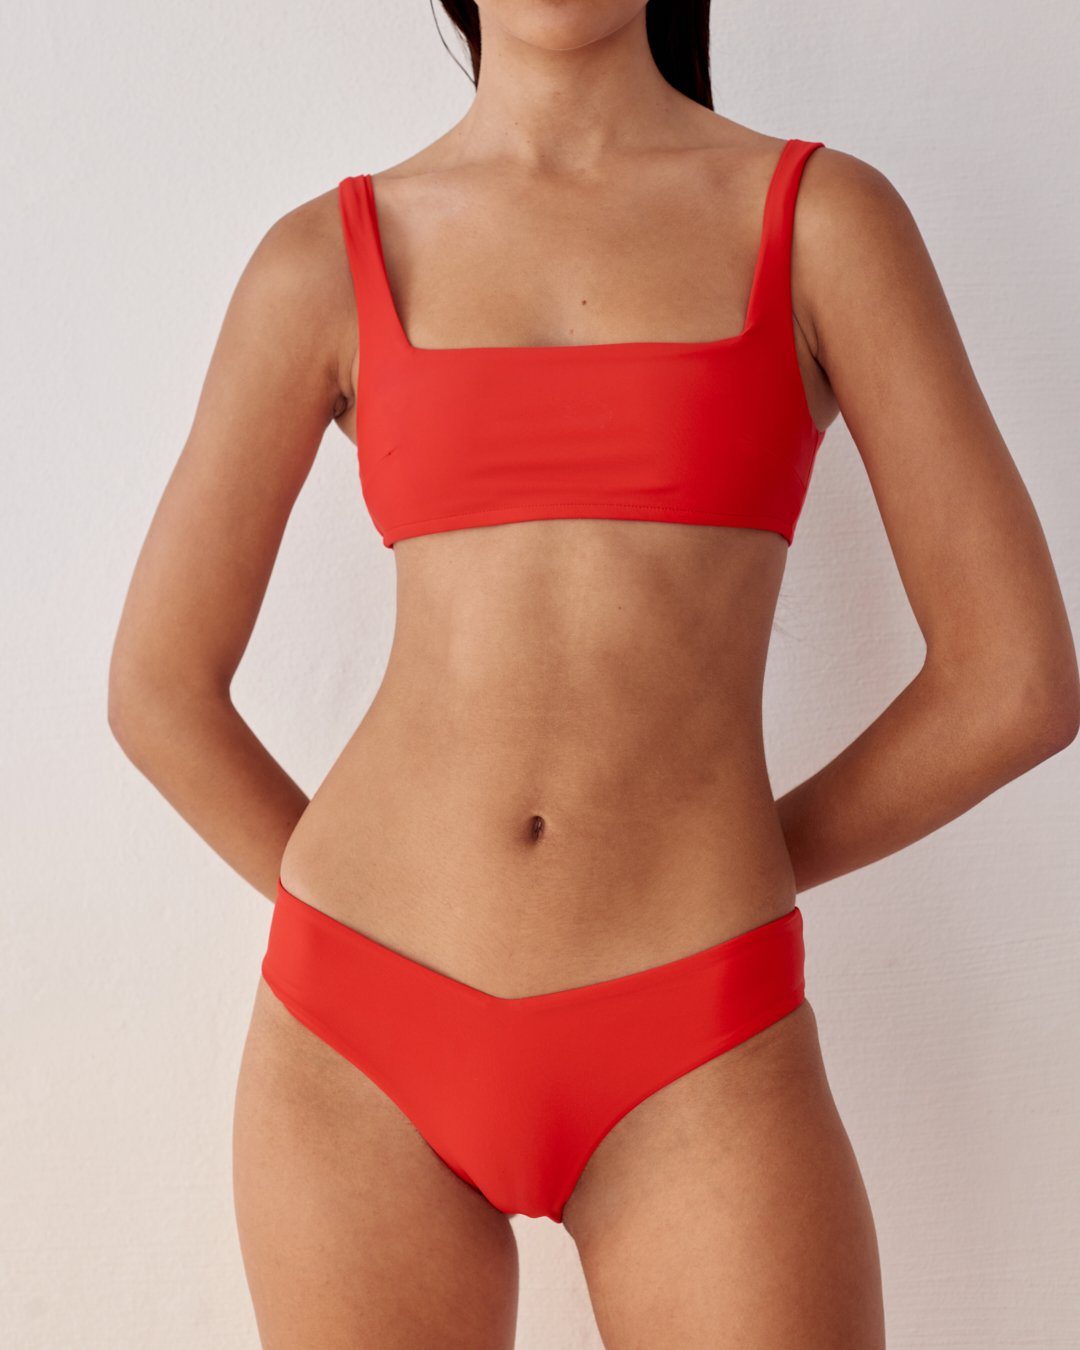 The V Red Leather Bikini Bottom product